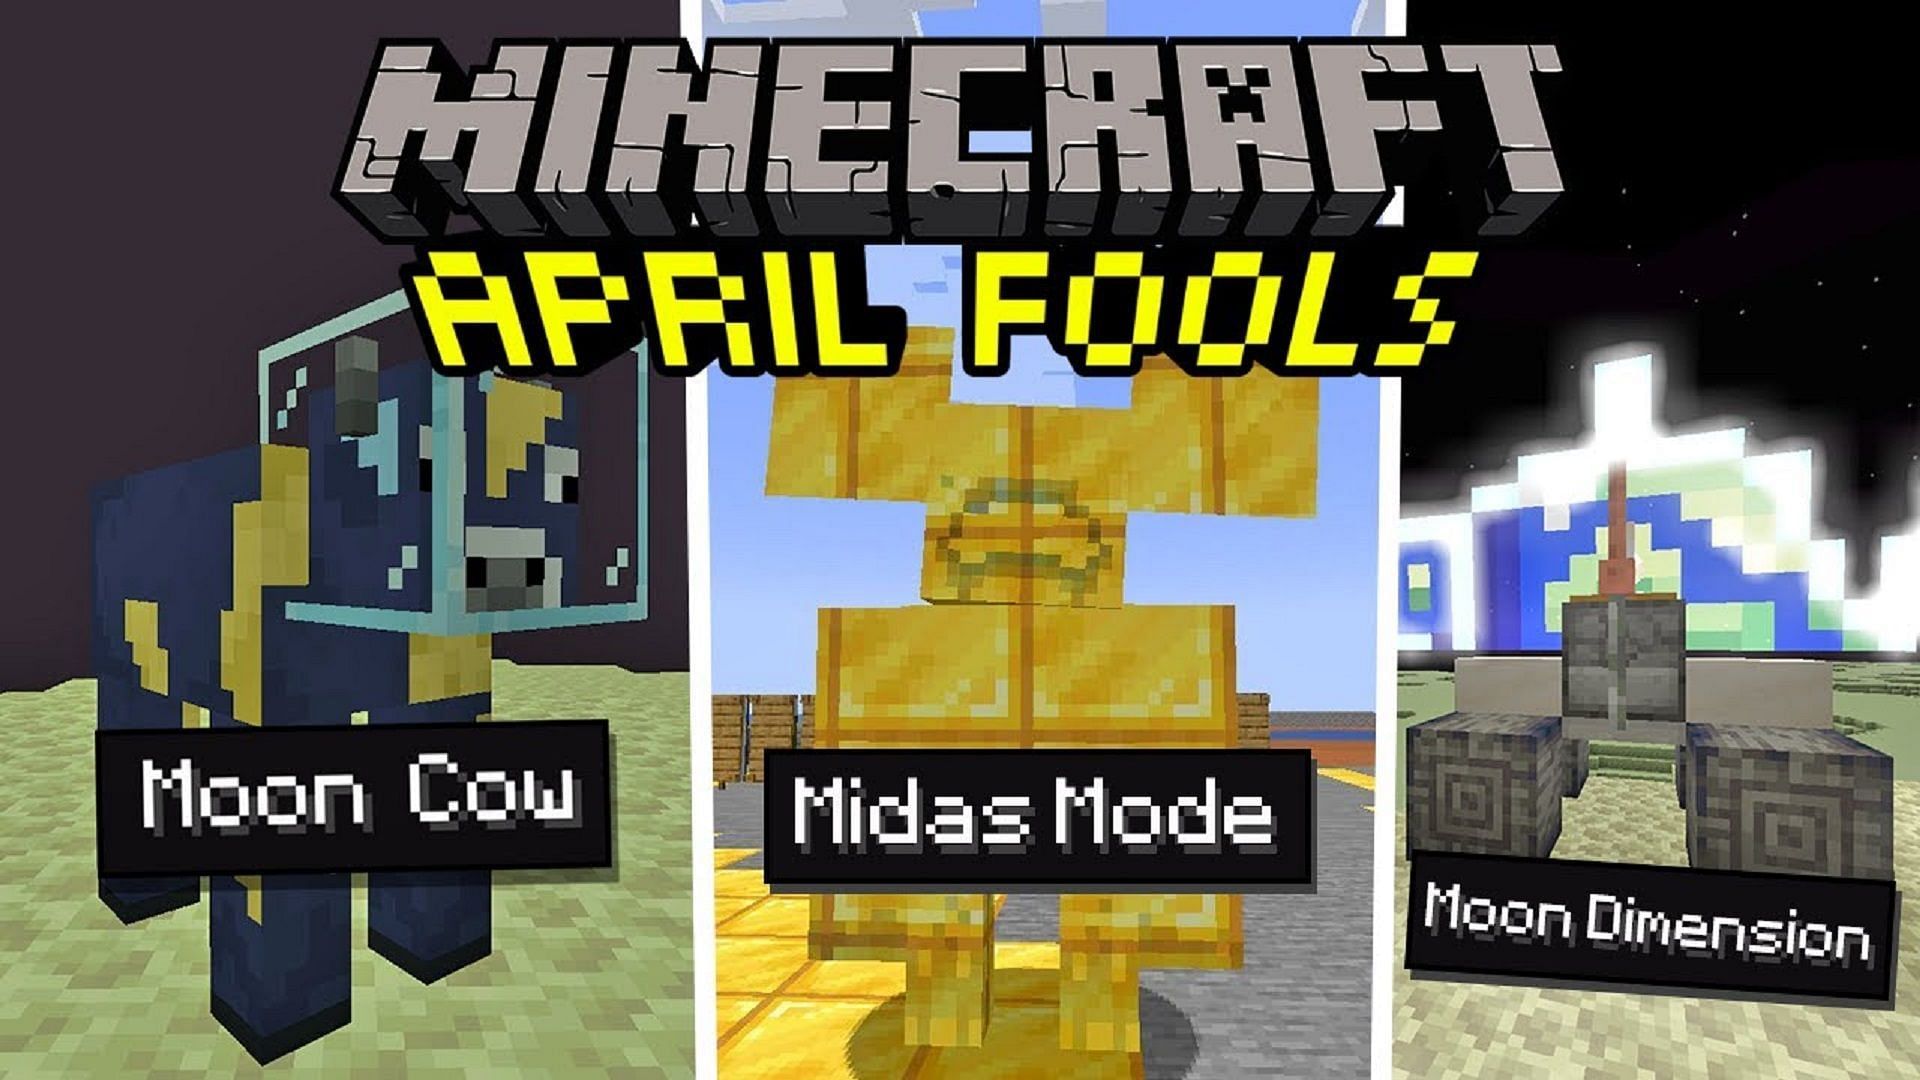 Top 5 hilarious features in Minecraft April Fools snapshot